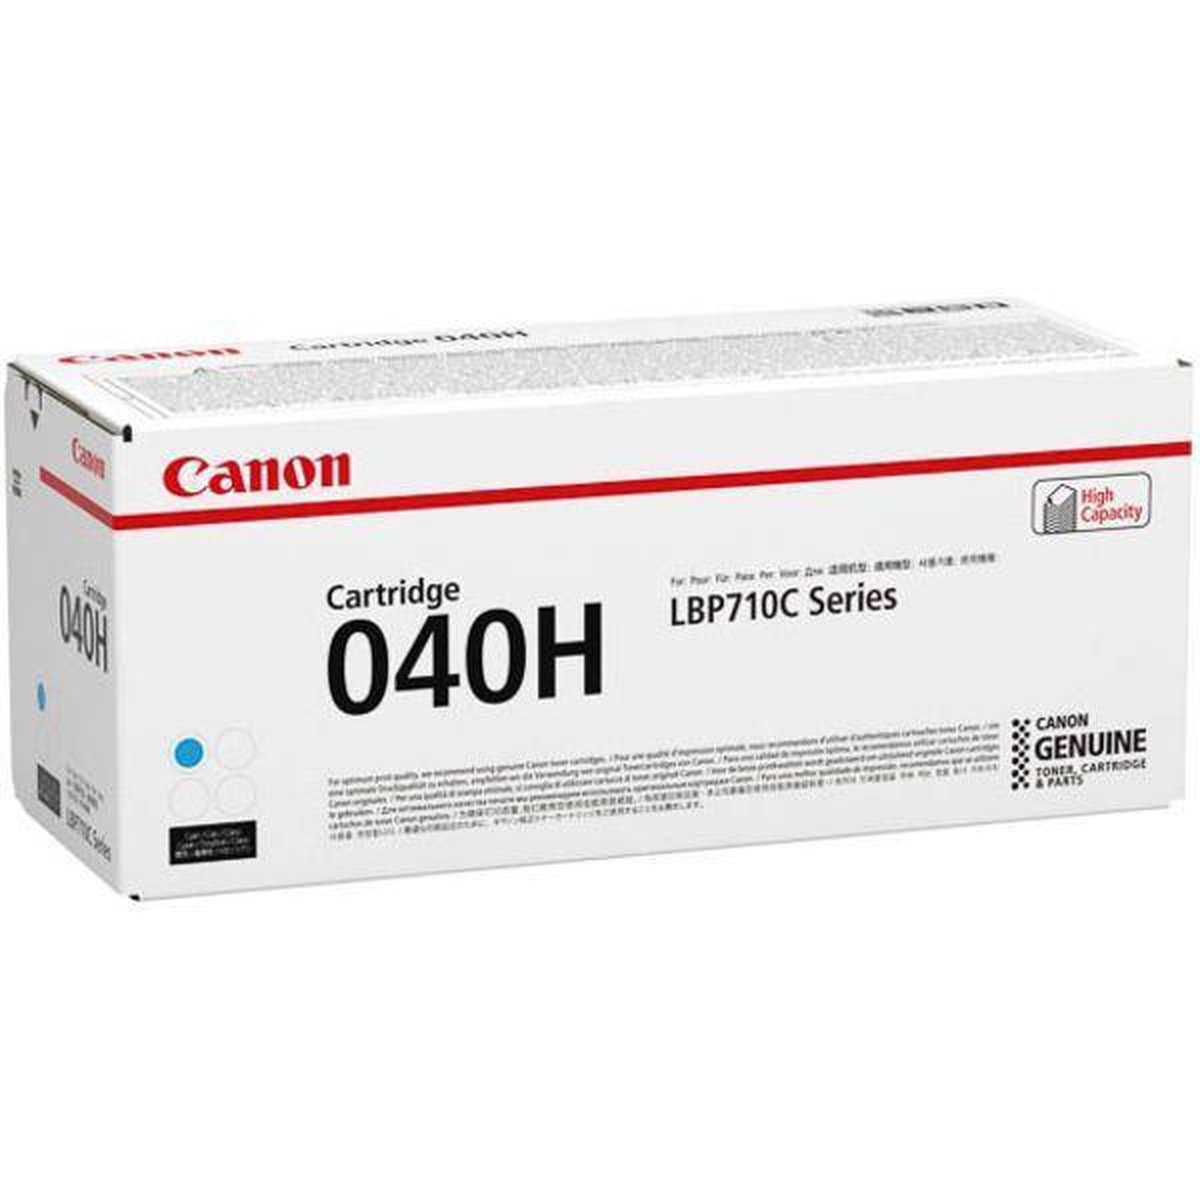 CANON 040HC toner cyan high capacity yield 10.000